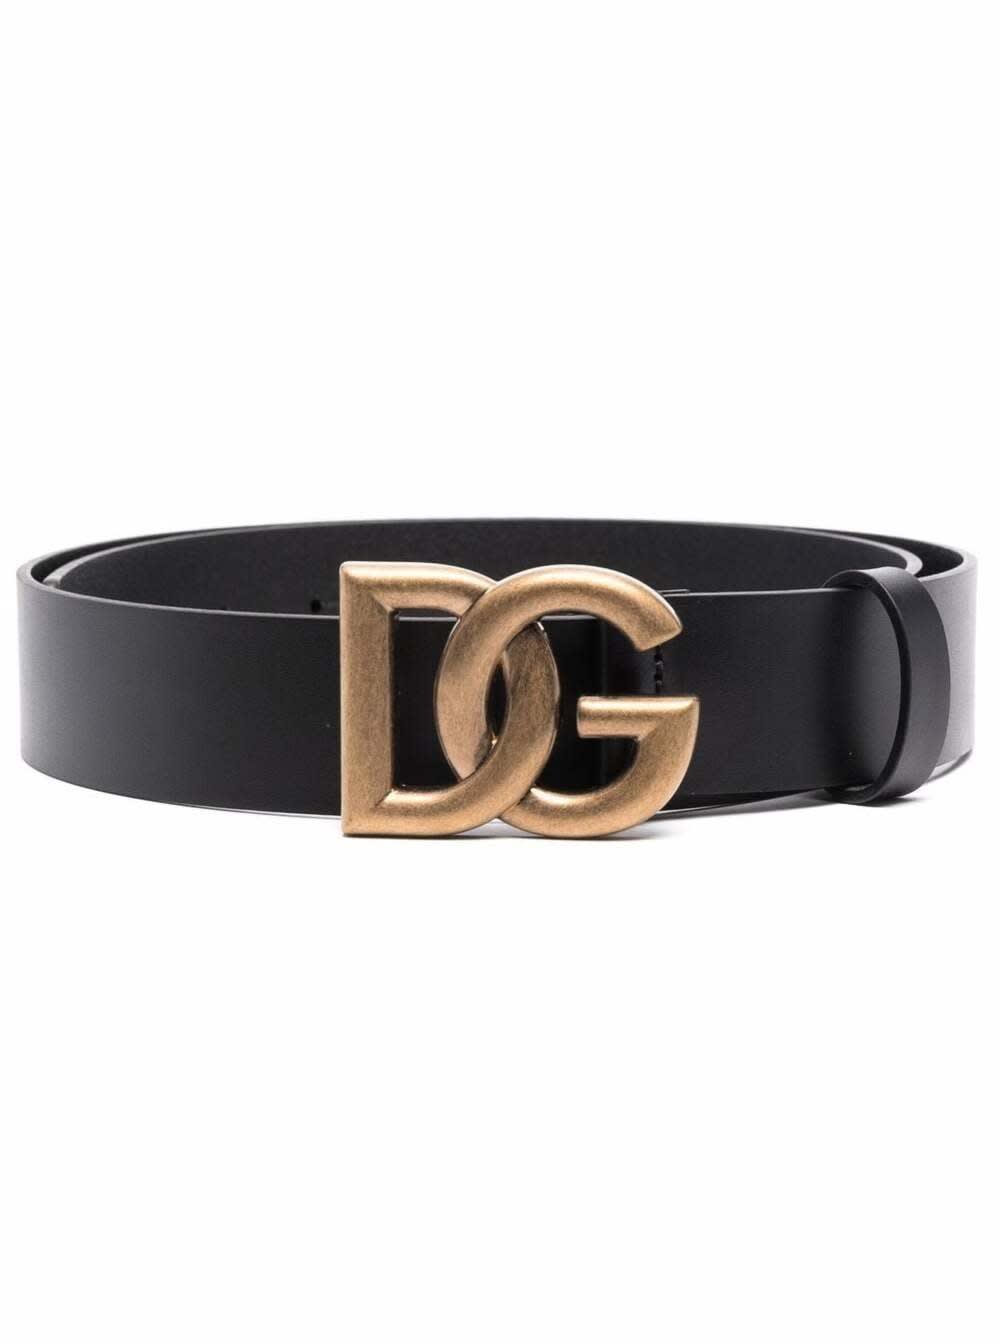 Dolce & Gabbana Black Leather Belt With Dg Buckle